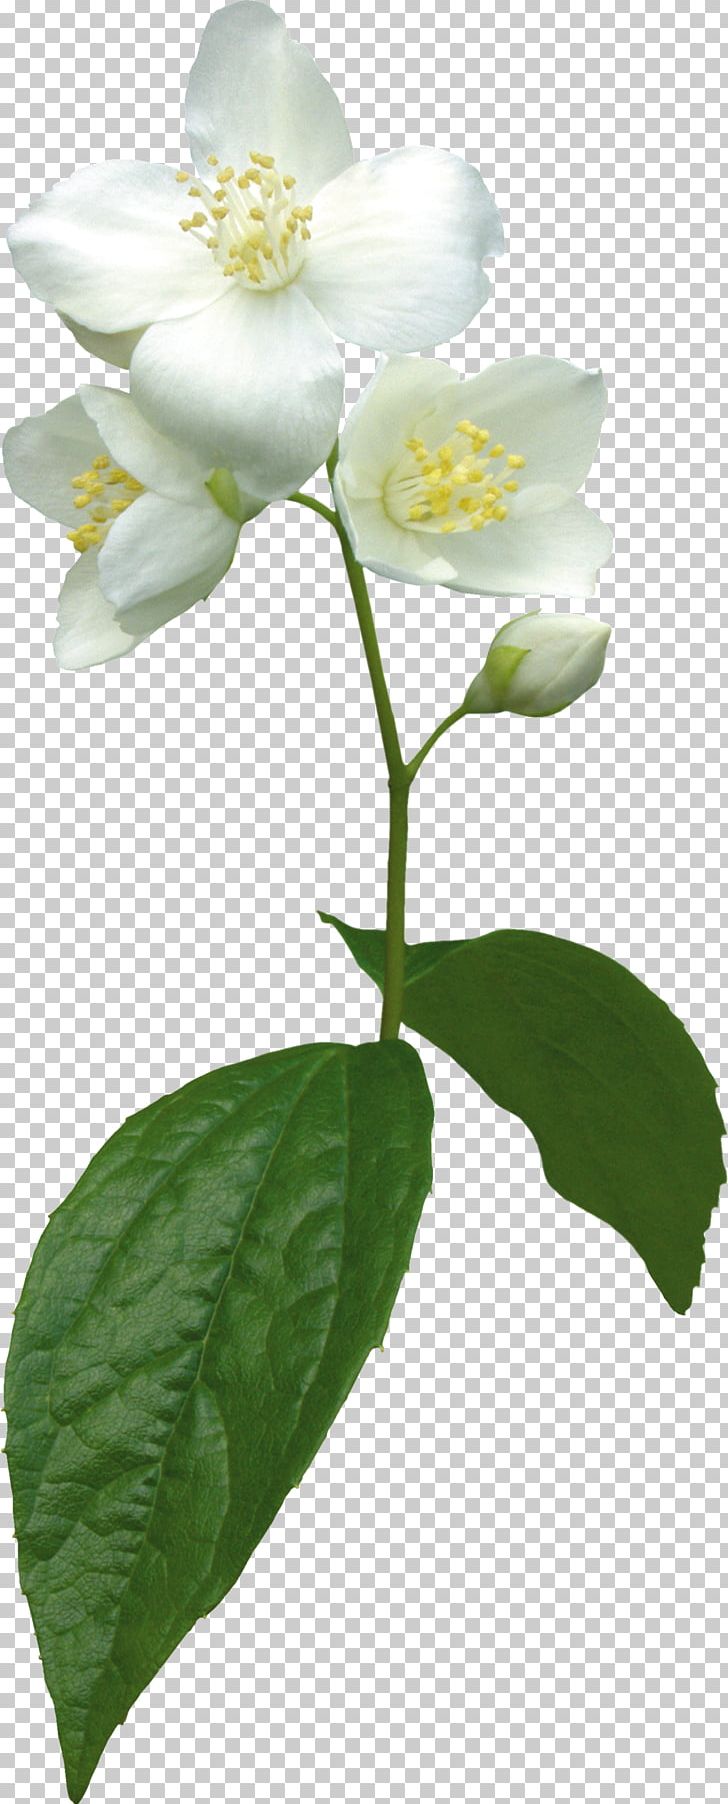 Flower Jasmine Plant PNG, Clipart, Clip Art, Digital Image, Flower, Flowering Plant, Jasmine Free PNG Download